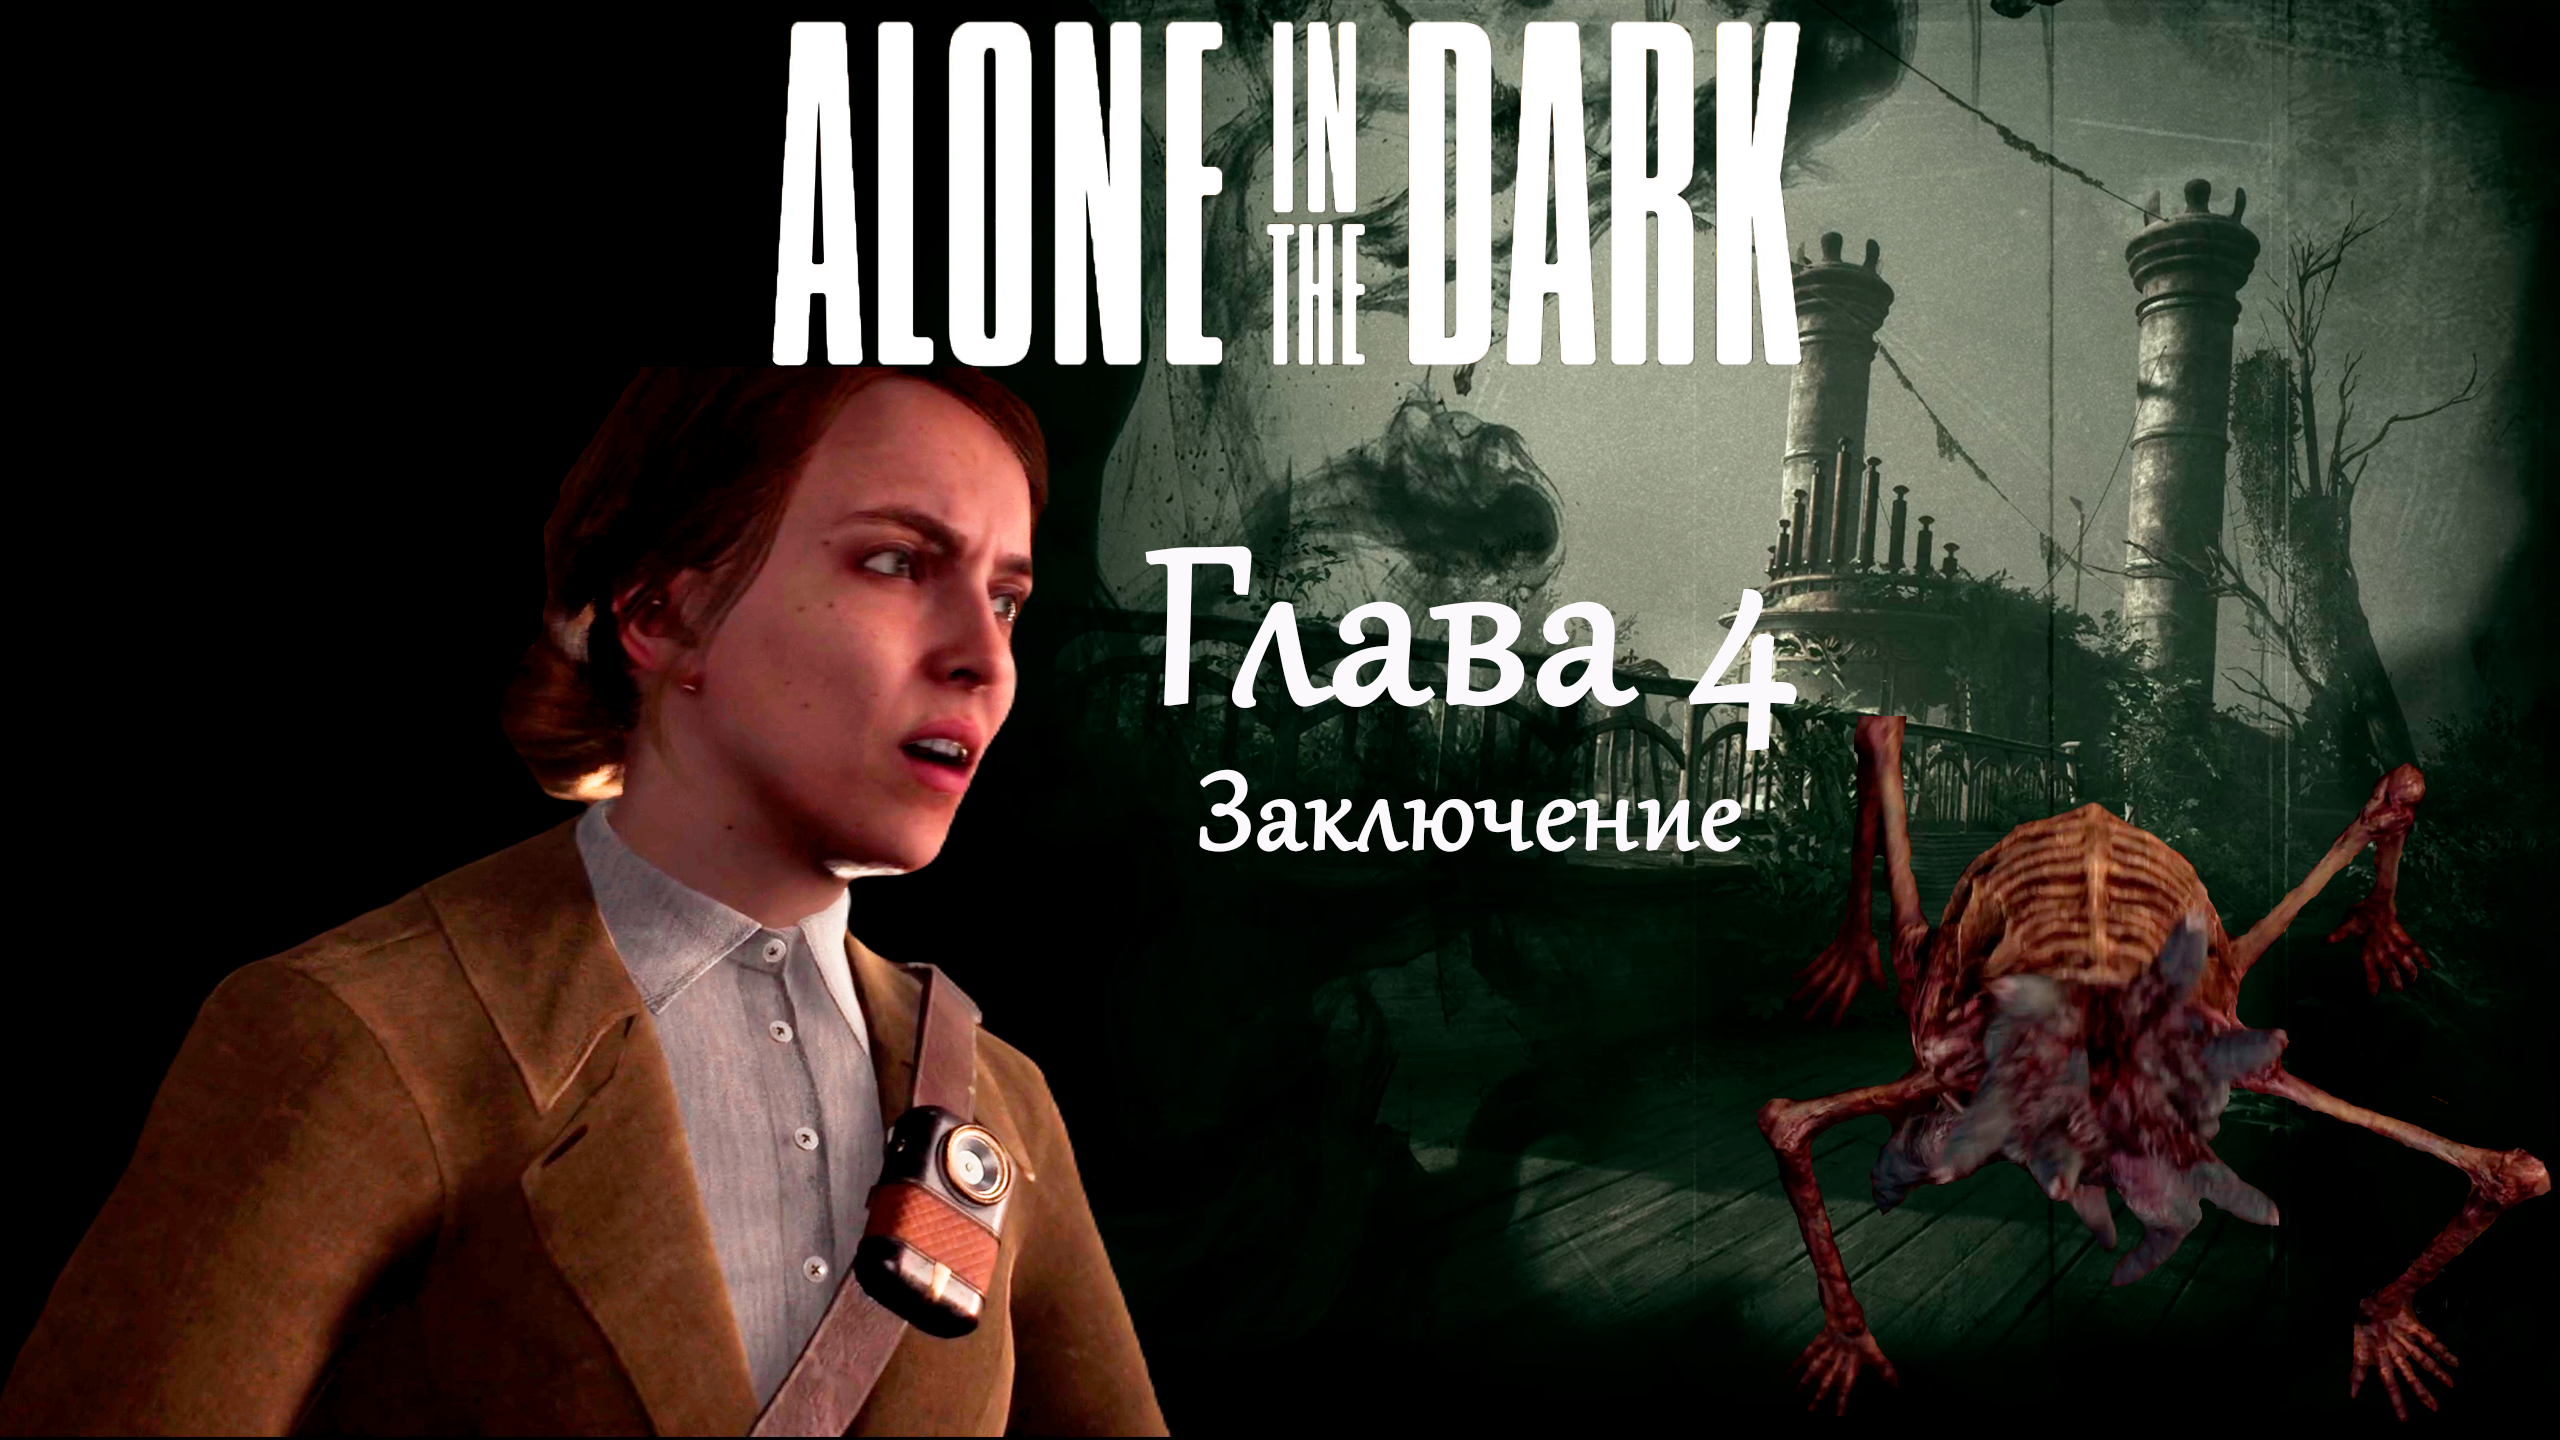 Заканчиваем проходить главу 4 ★ Alone in the dark